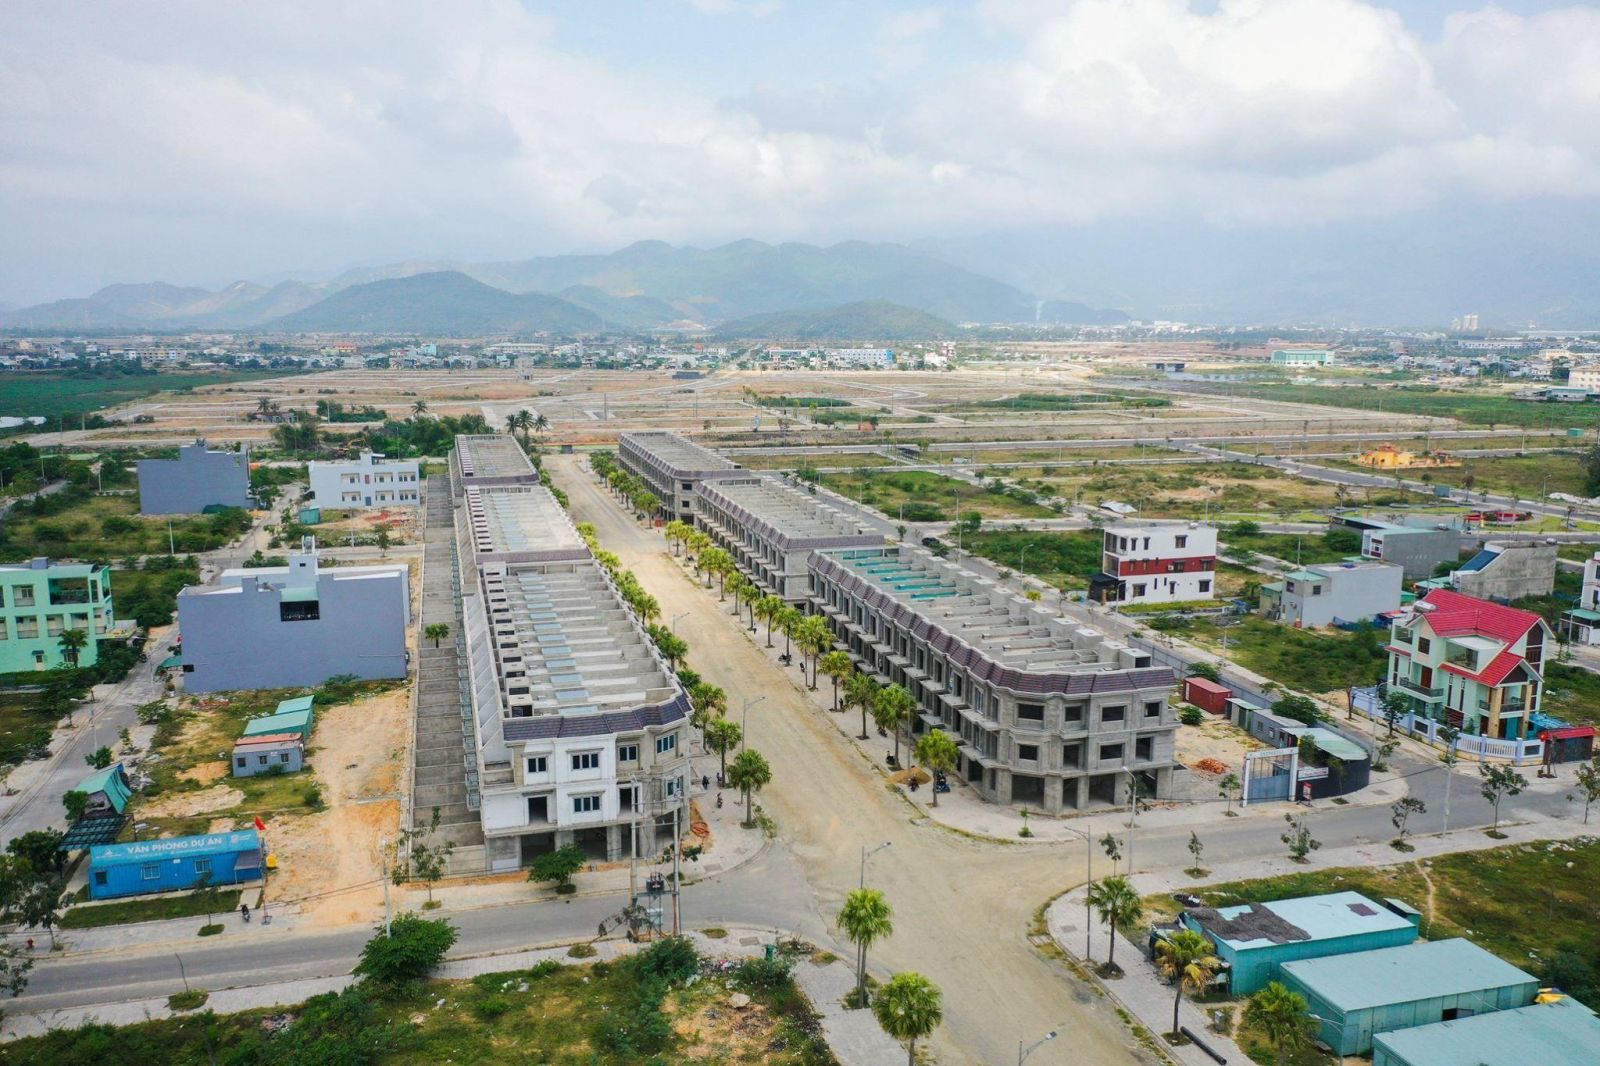 [GÓC CẬP NHẬT] DỰ ÁN SHOPHOUSE LAKESIDE INFINITY THÁNG 2/2020 - Viet Nam Smart City